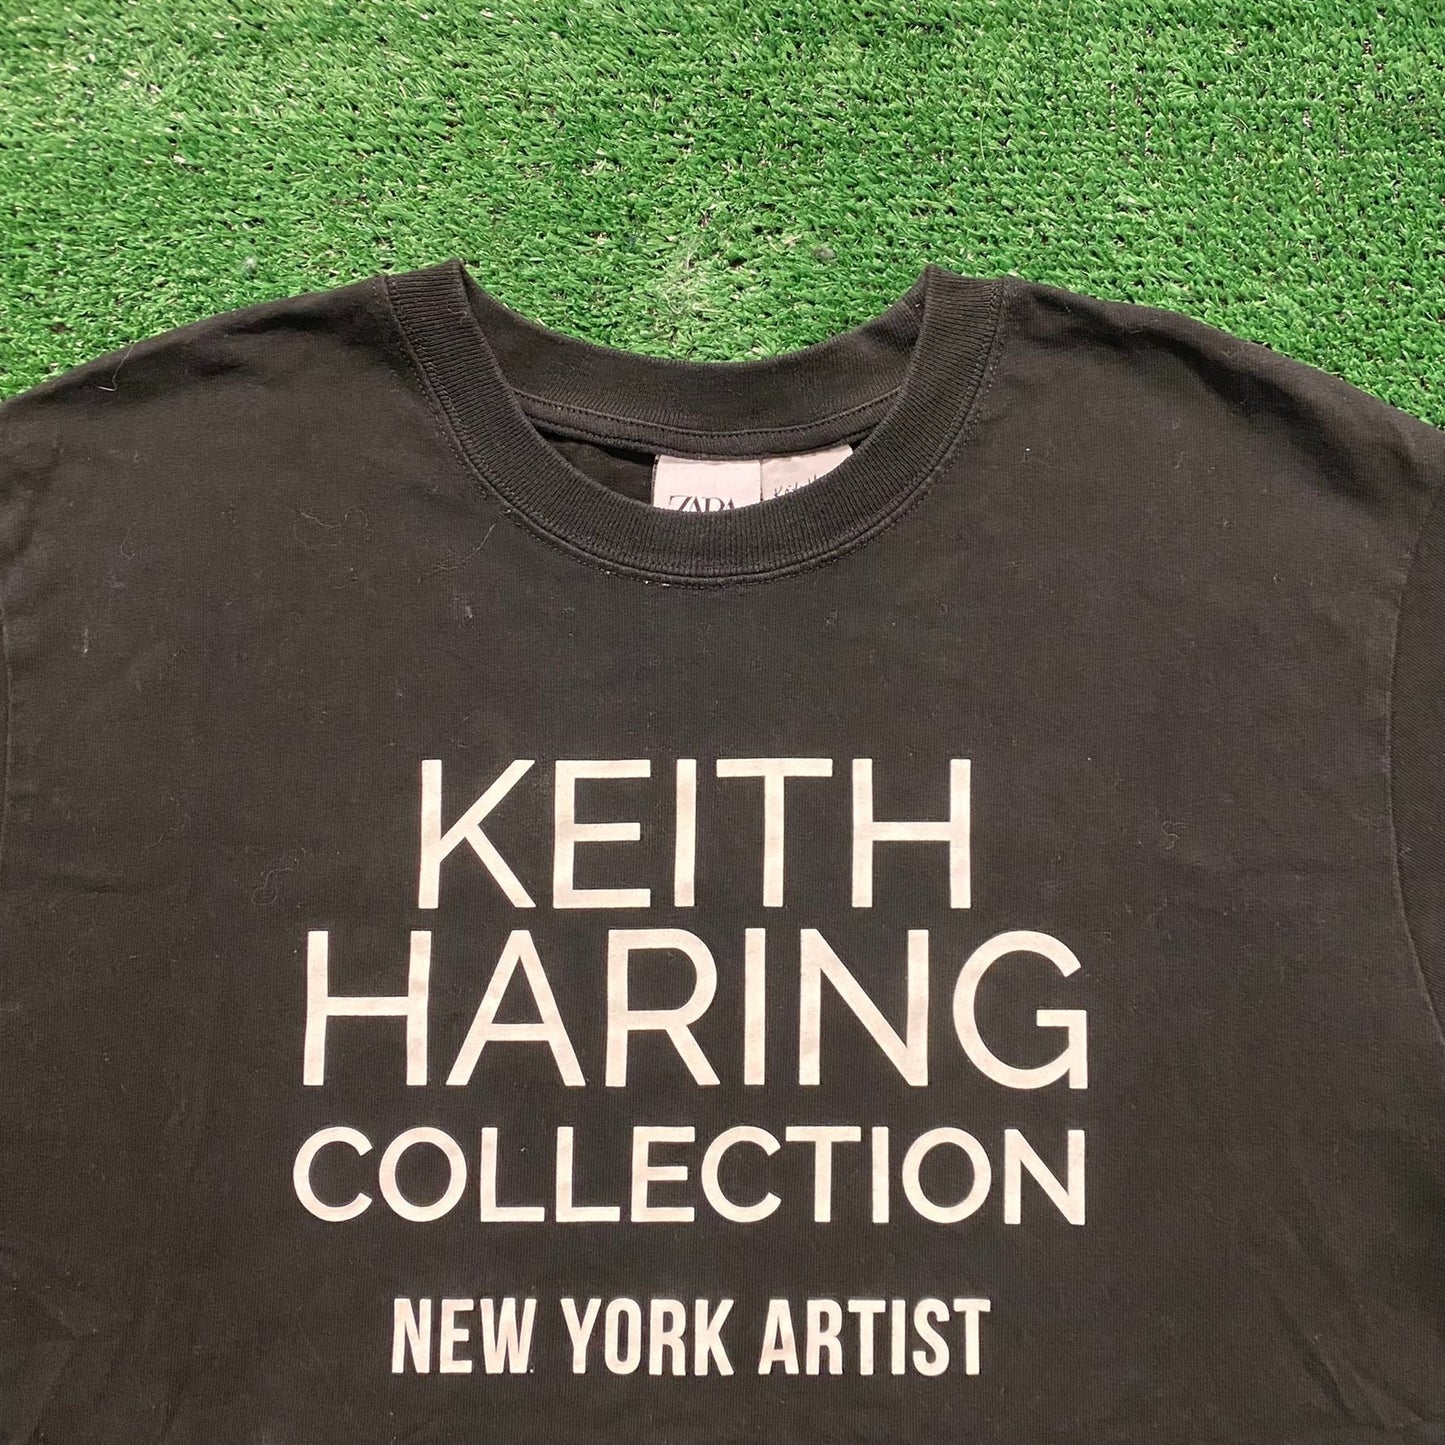 Keith Haring New York Vintage Painting Pop Art T-Shirt